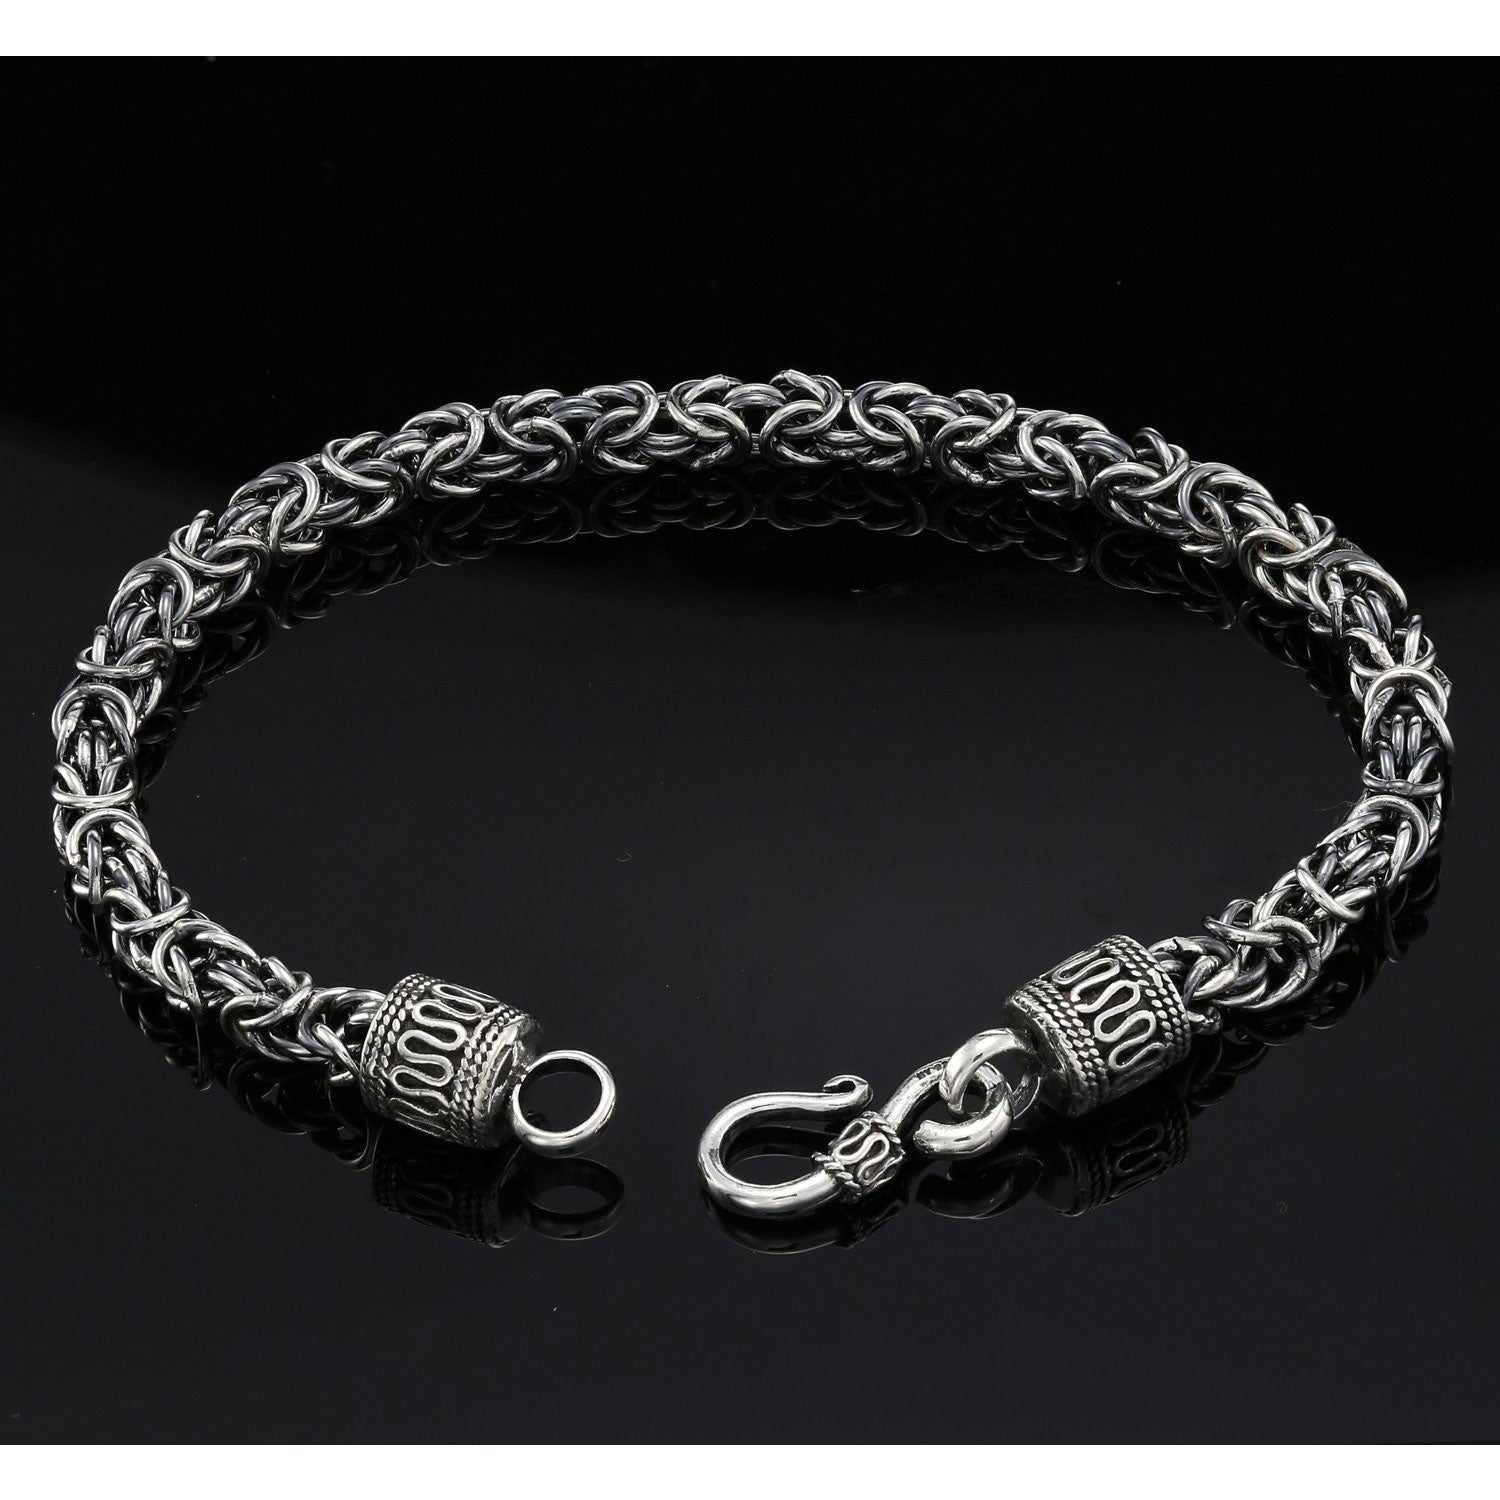 Dark Handmade Byzantine Chain Bracelet with S-Hook Clasp. unisex in Sterling Silver